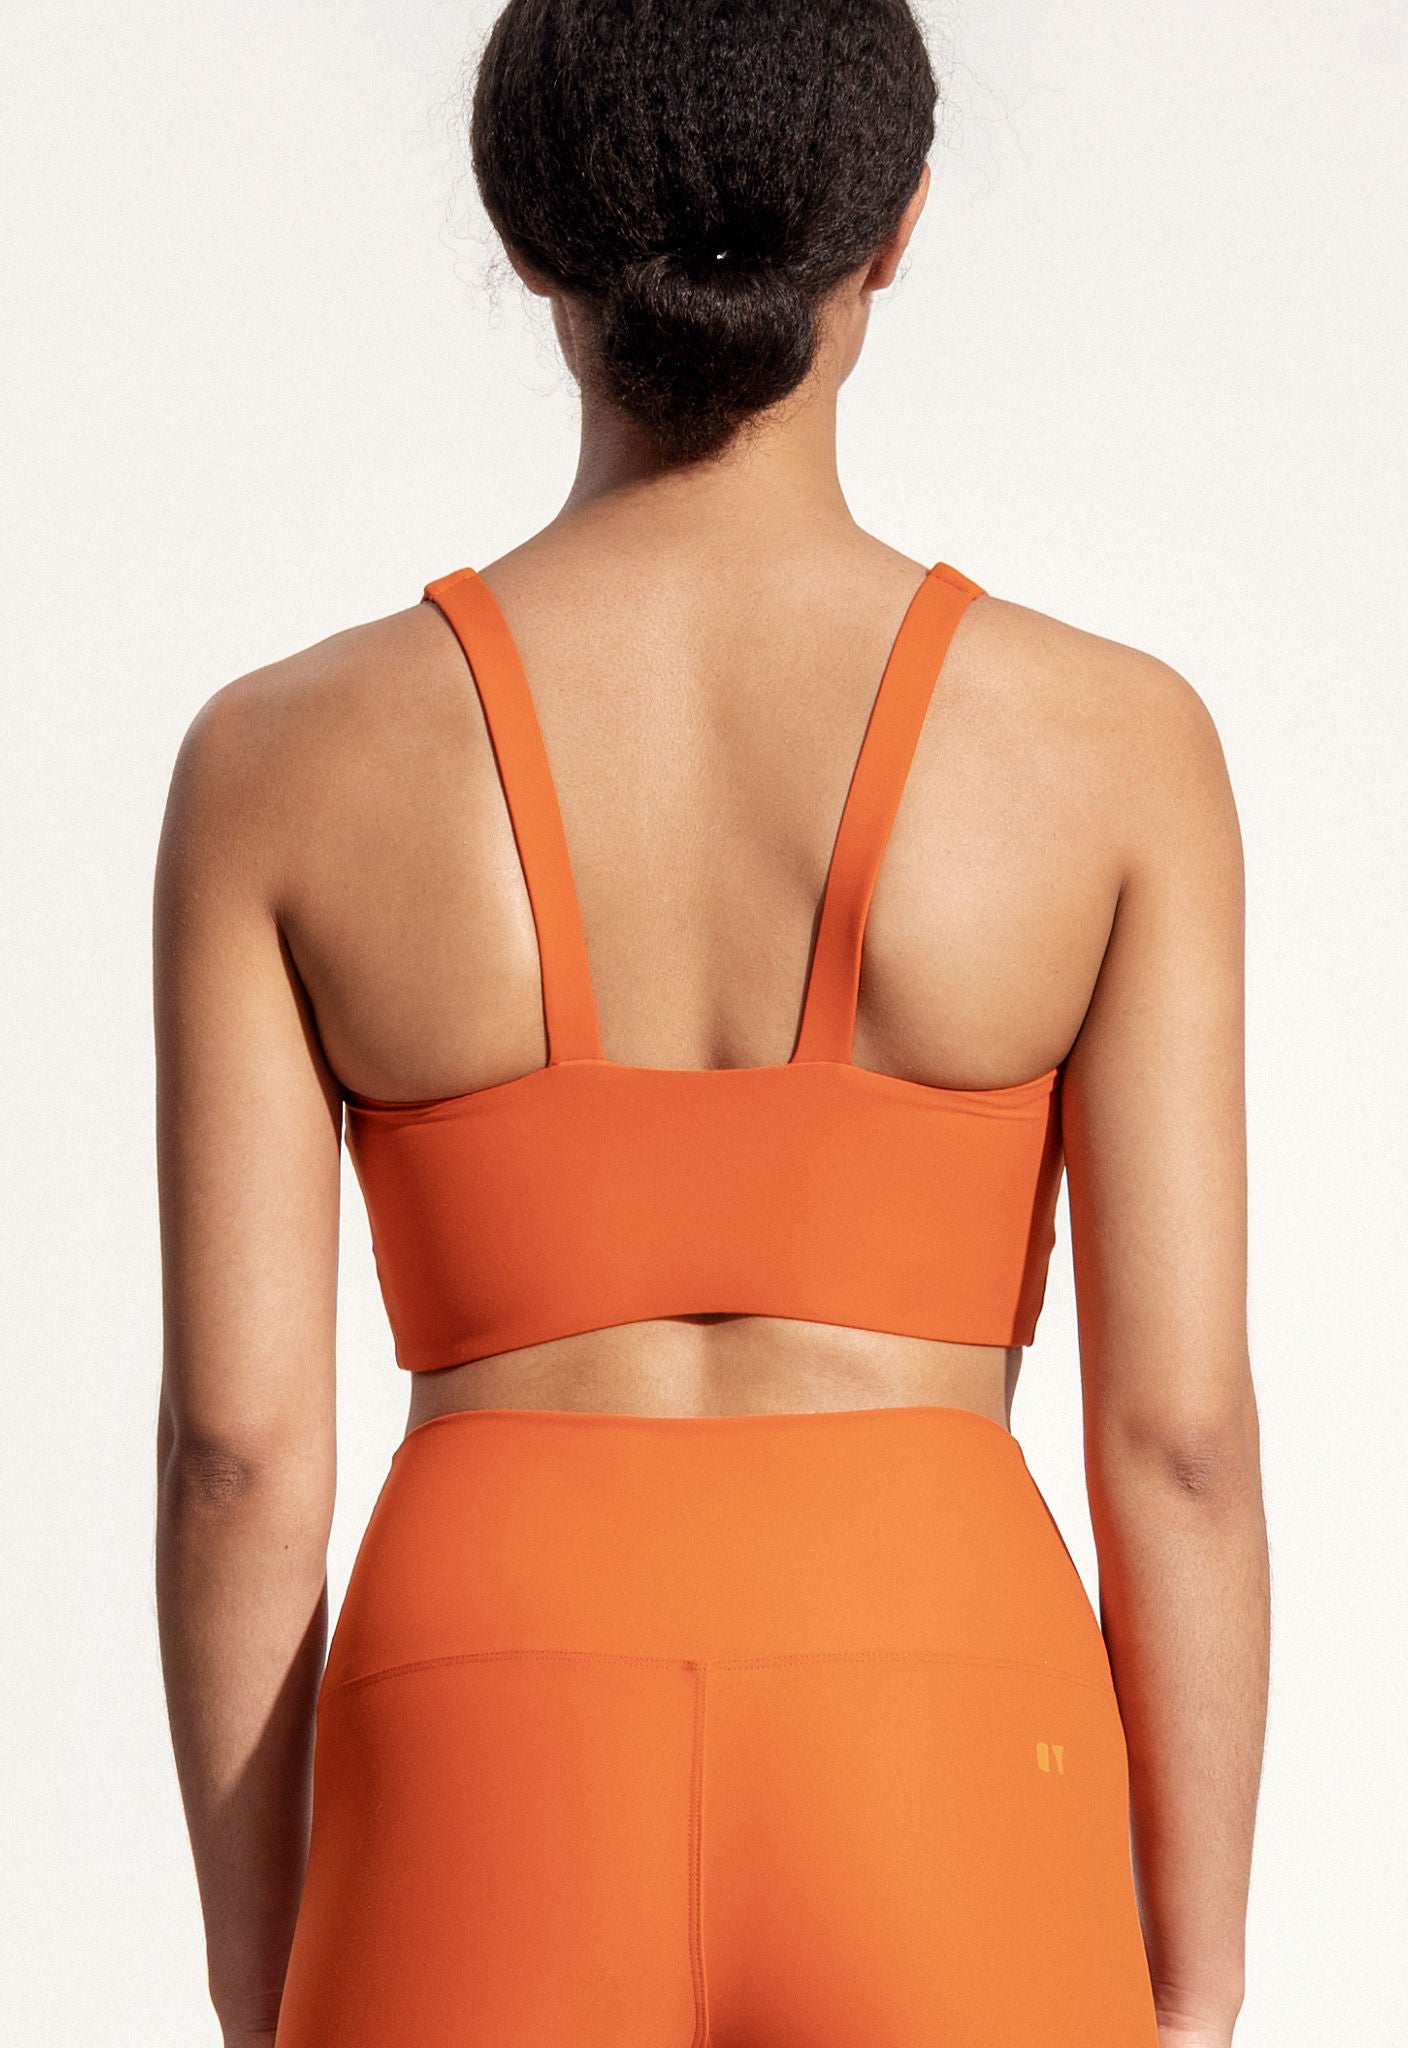 Oy-Yoga-Activewear-20-Top-Elin-tangerine-02.jpg